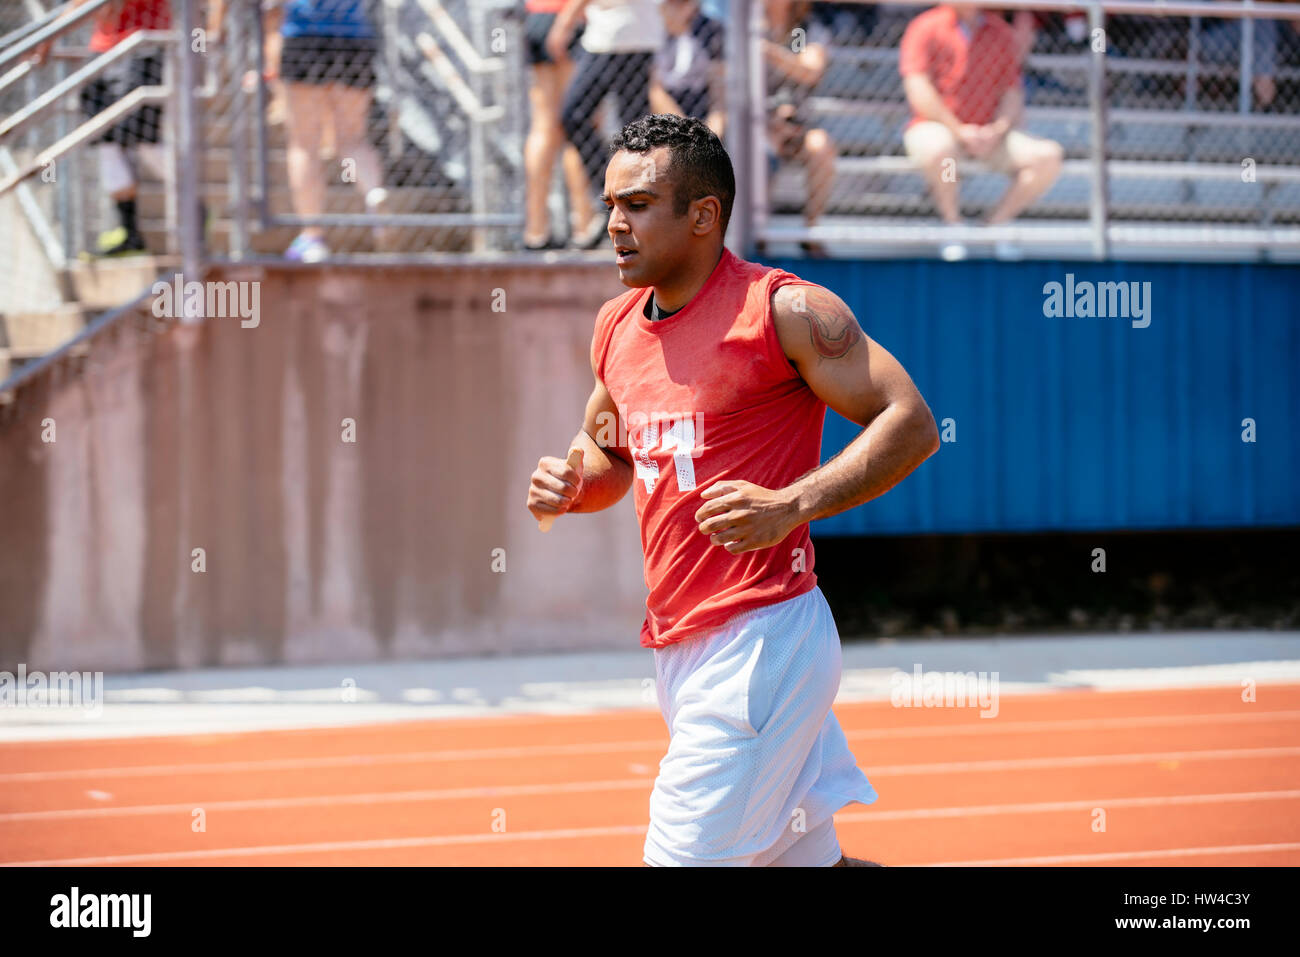 Hispanic man running on track Stock Photo